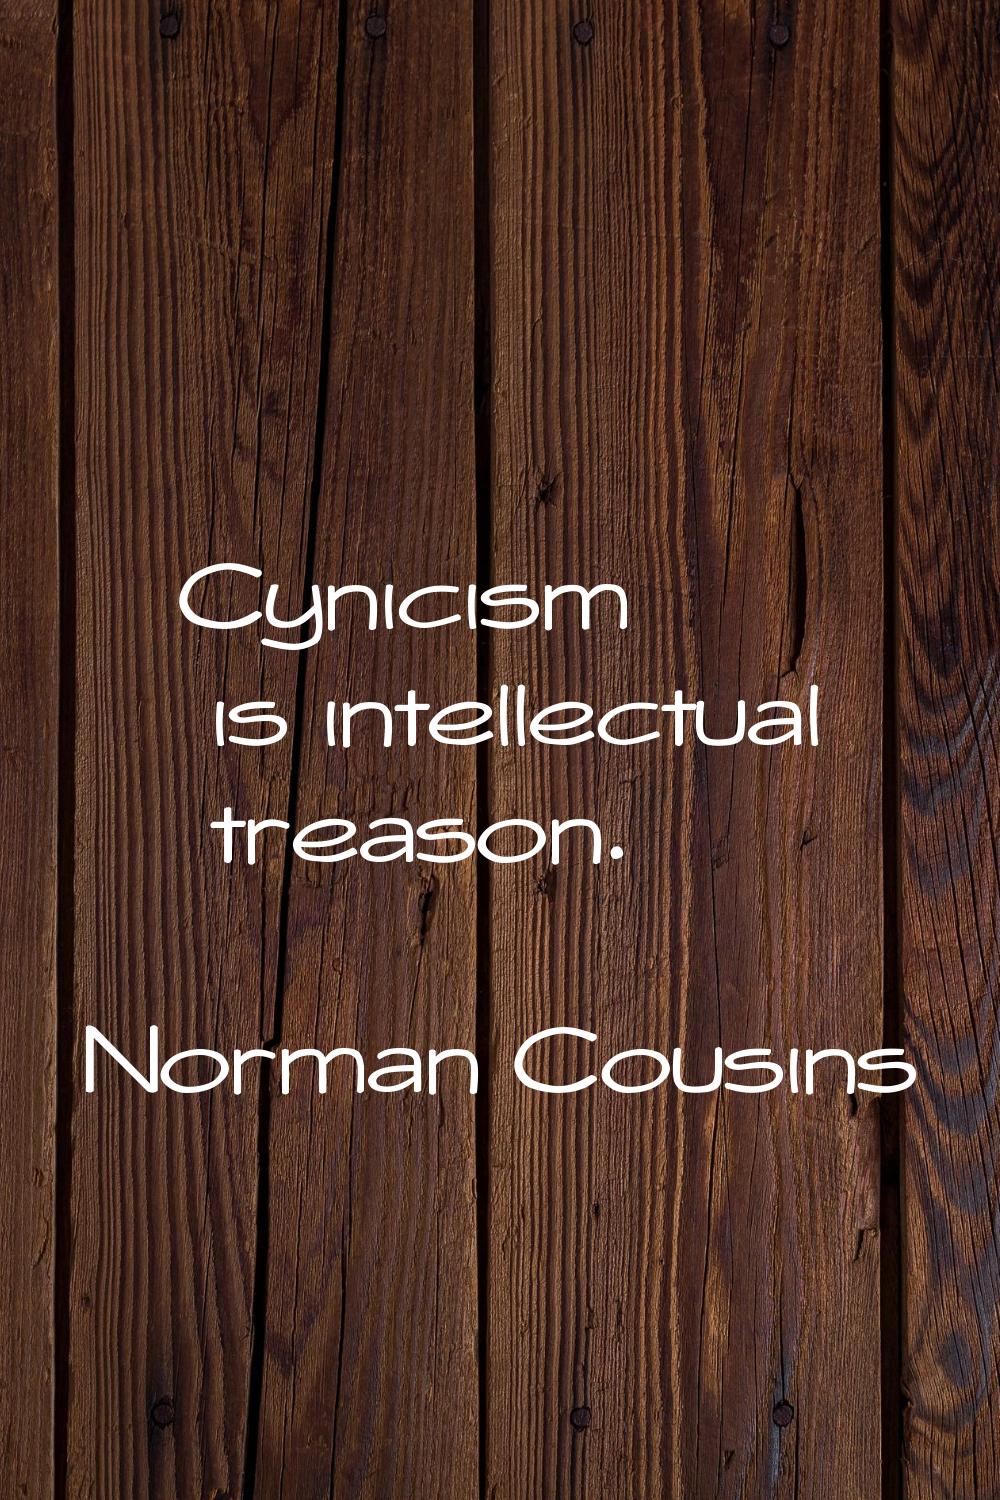 Cynicism is intellectual treason.